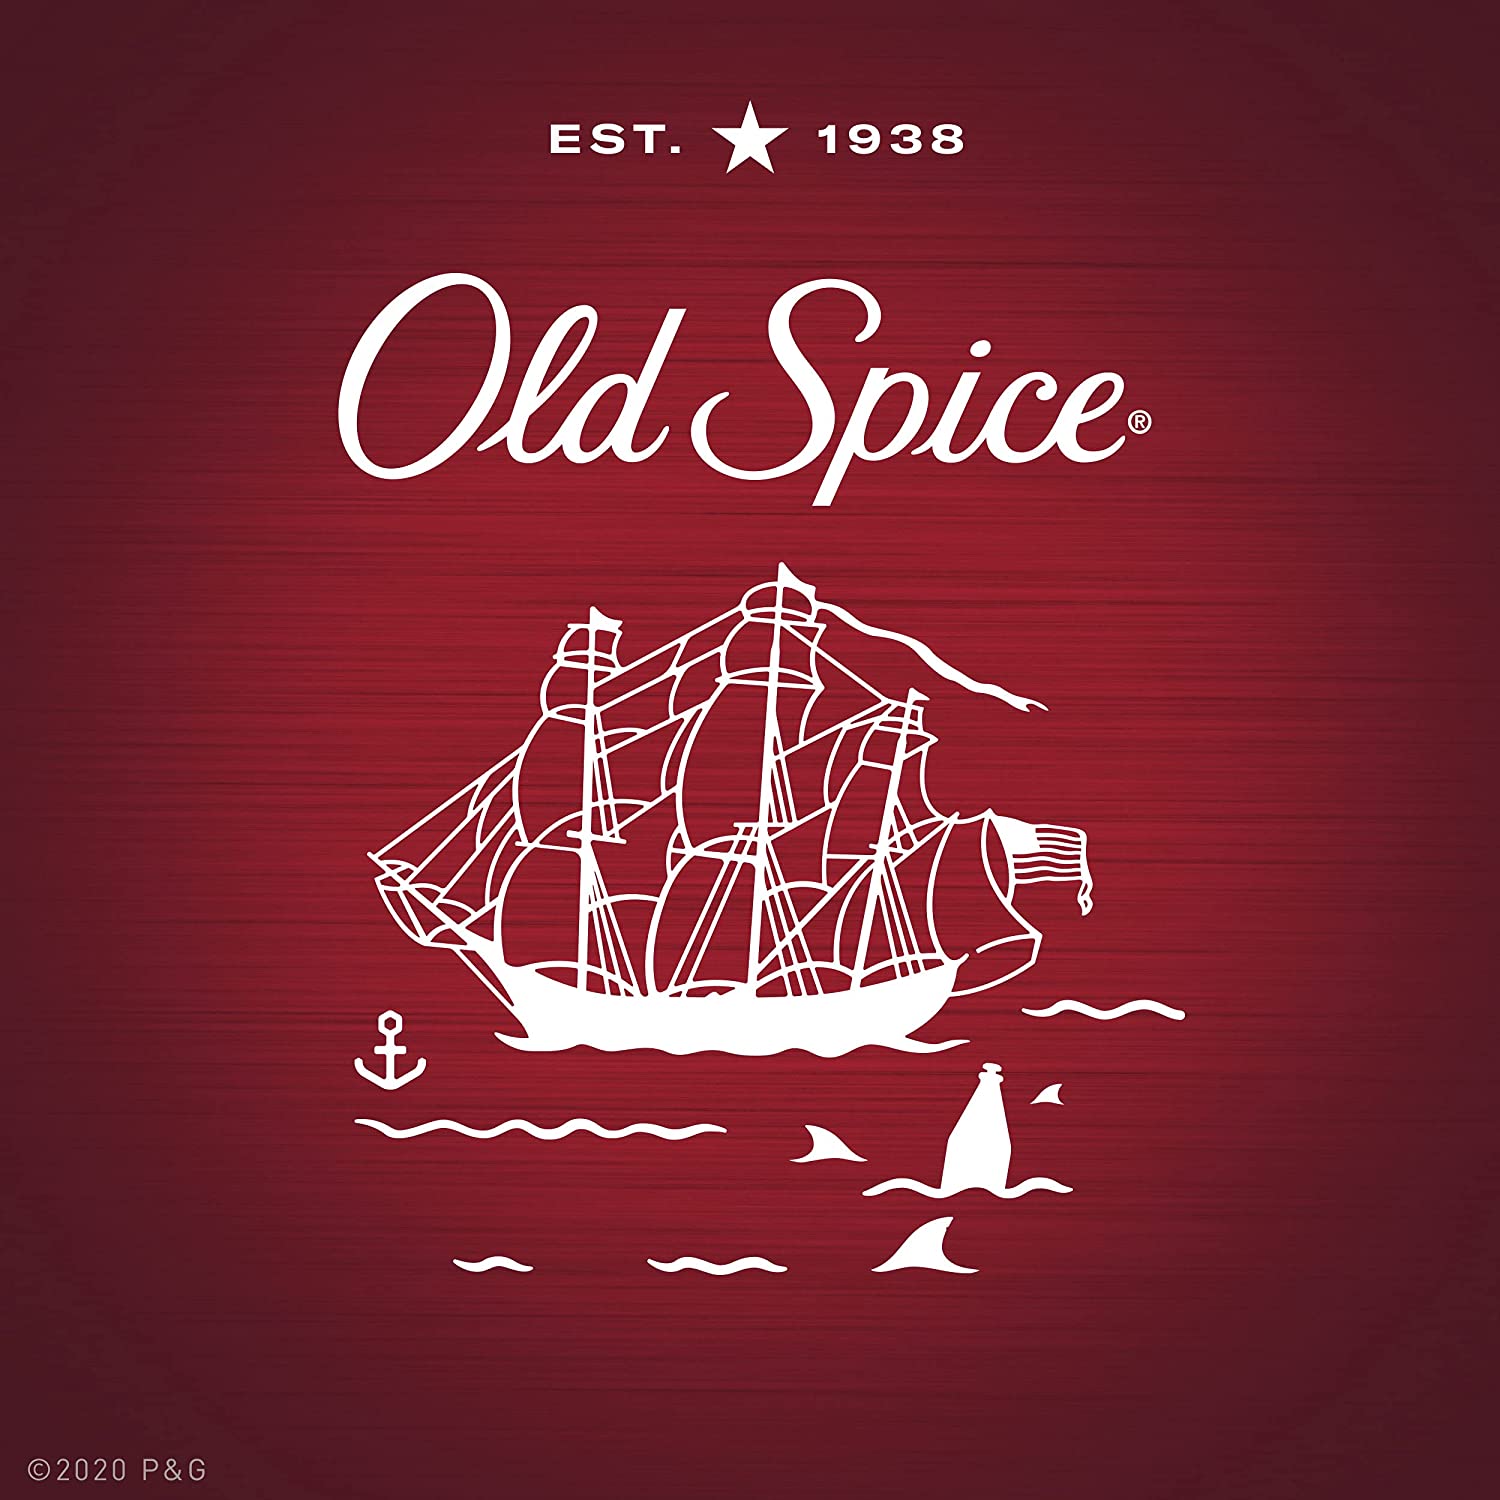 Old Spice Classic Original Scent Deodorant for Men, 3.25 oz, Pack of 2 - image 4 of 5